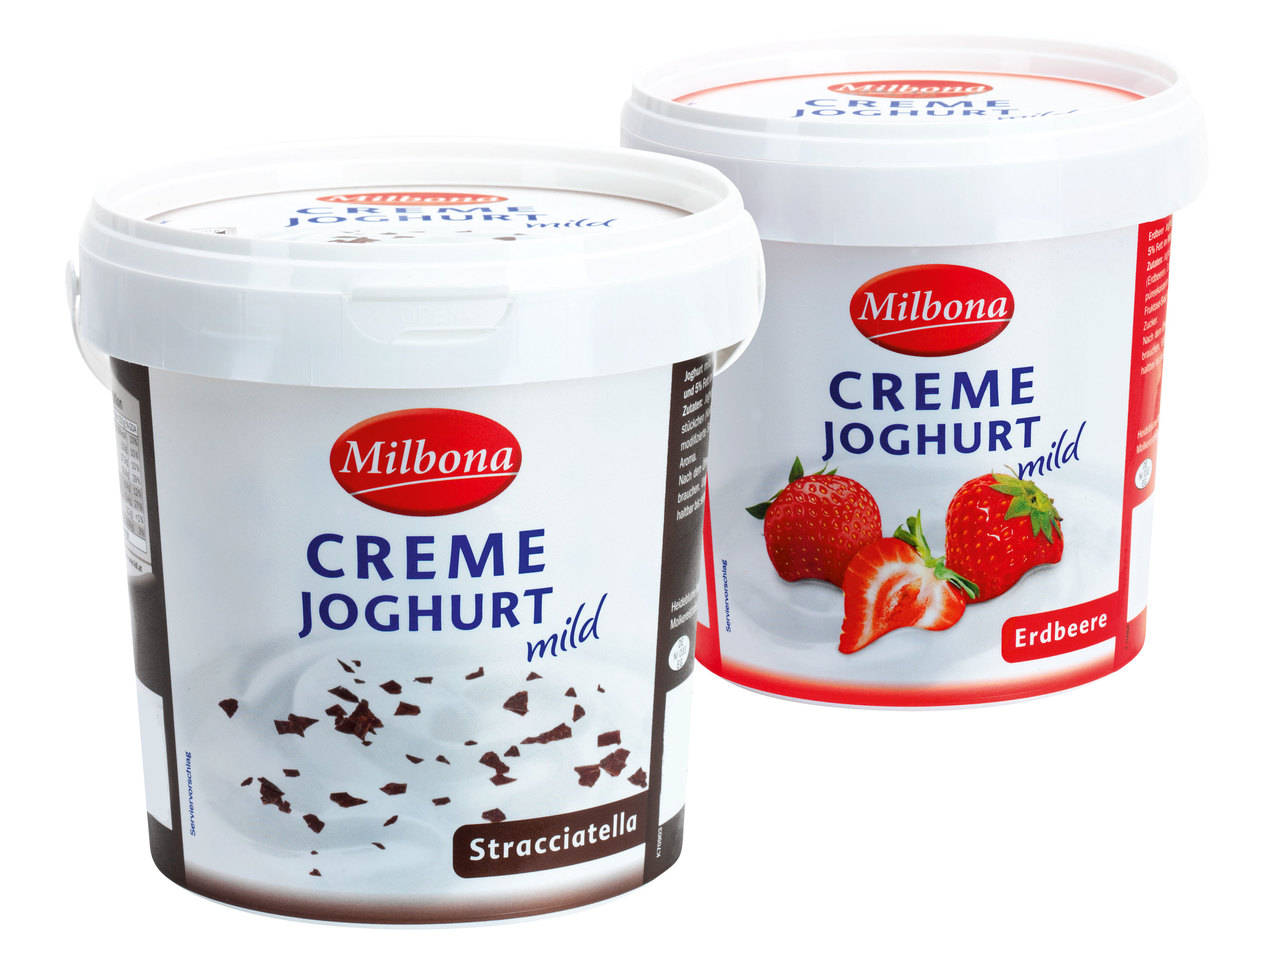 MILBONA Creme Joghurt